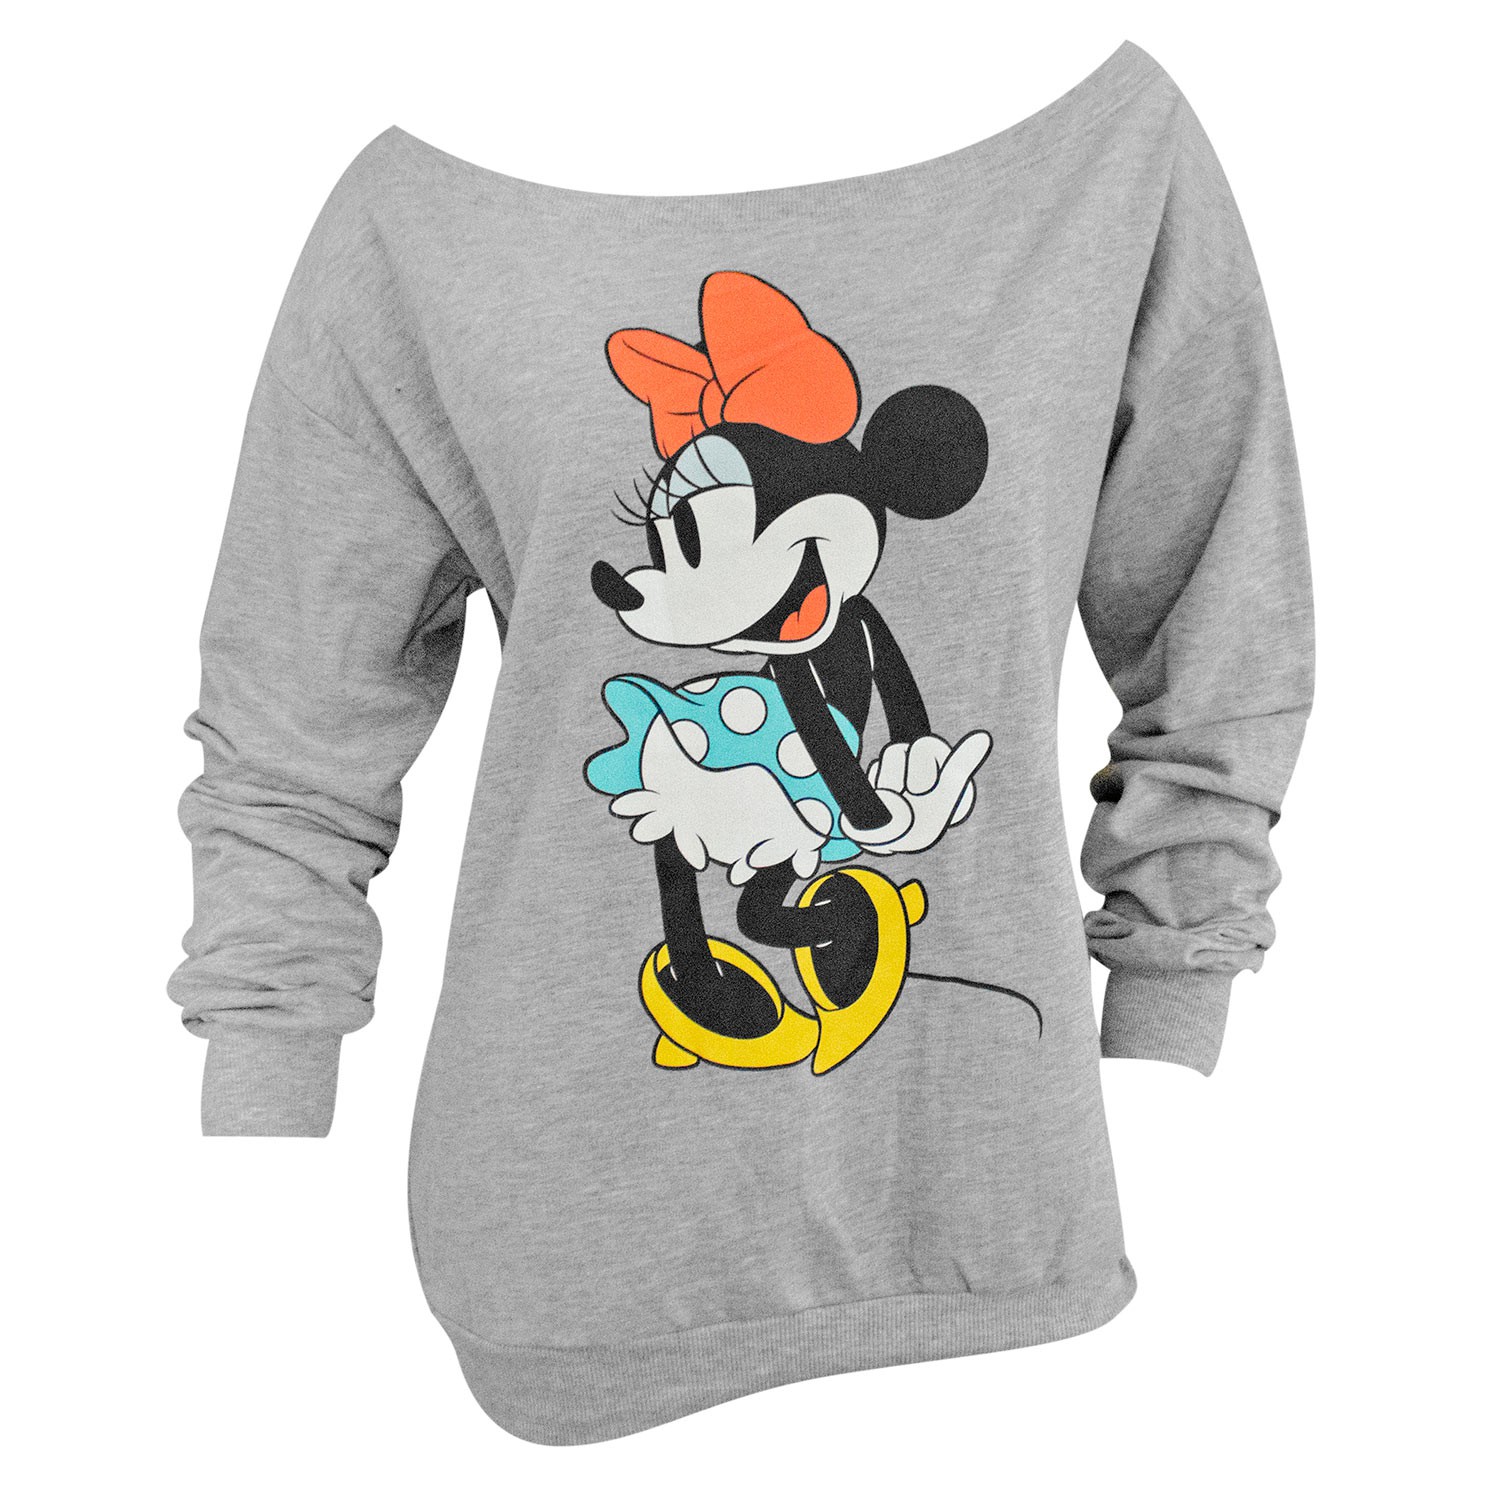 Minnie Mouse Flirty Women's Grey Sweatshirt